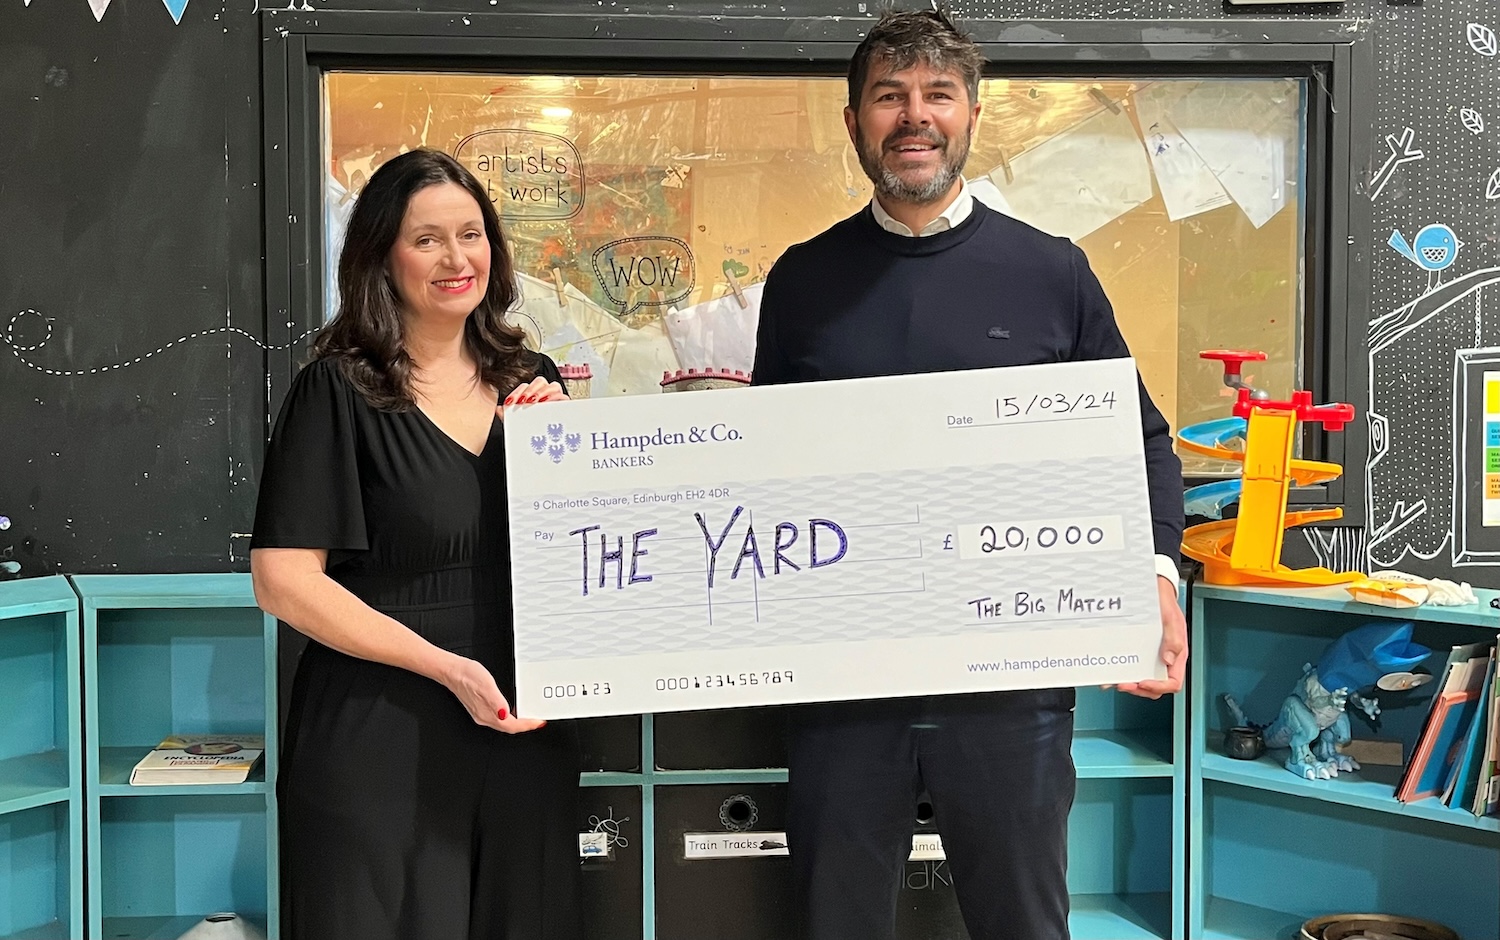 Edinburgh businesses score £20k for The Yard